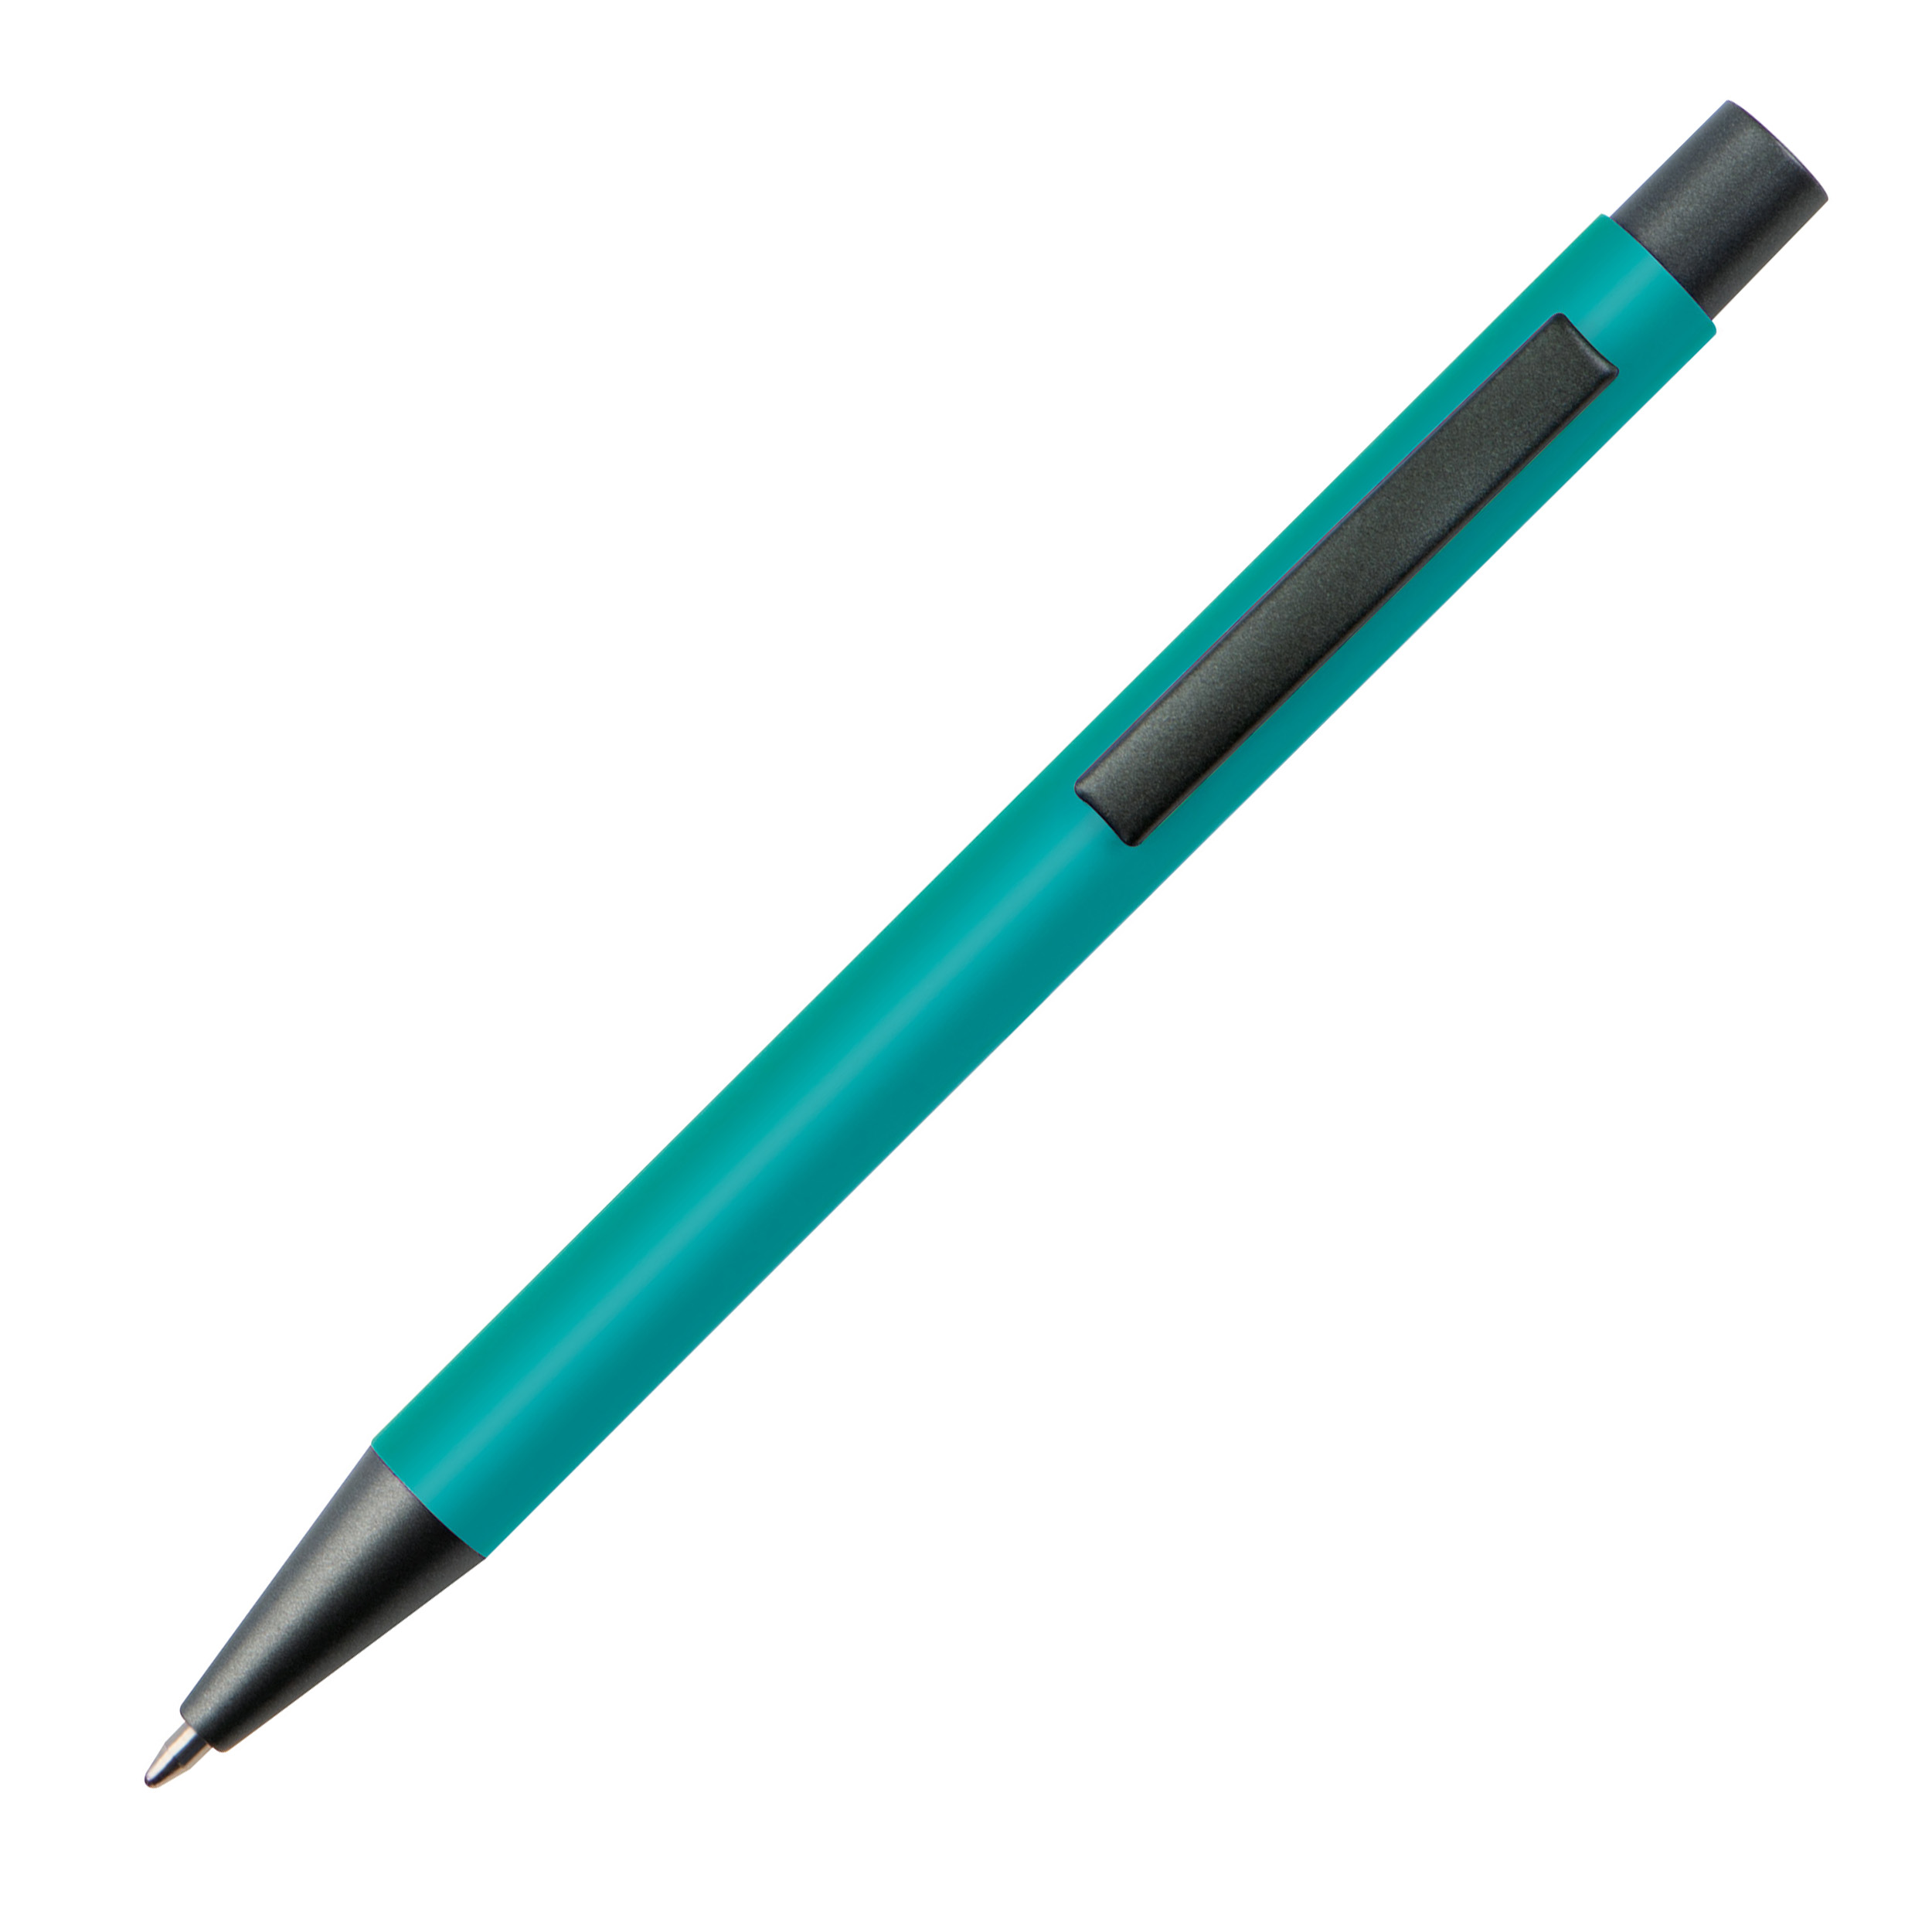 Plastic ballpoint pen with metal clip